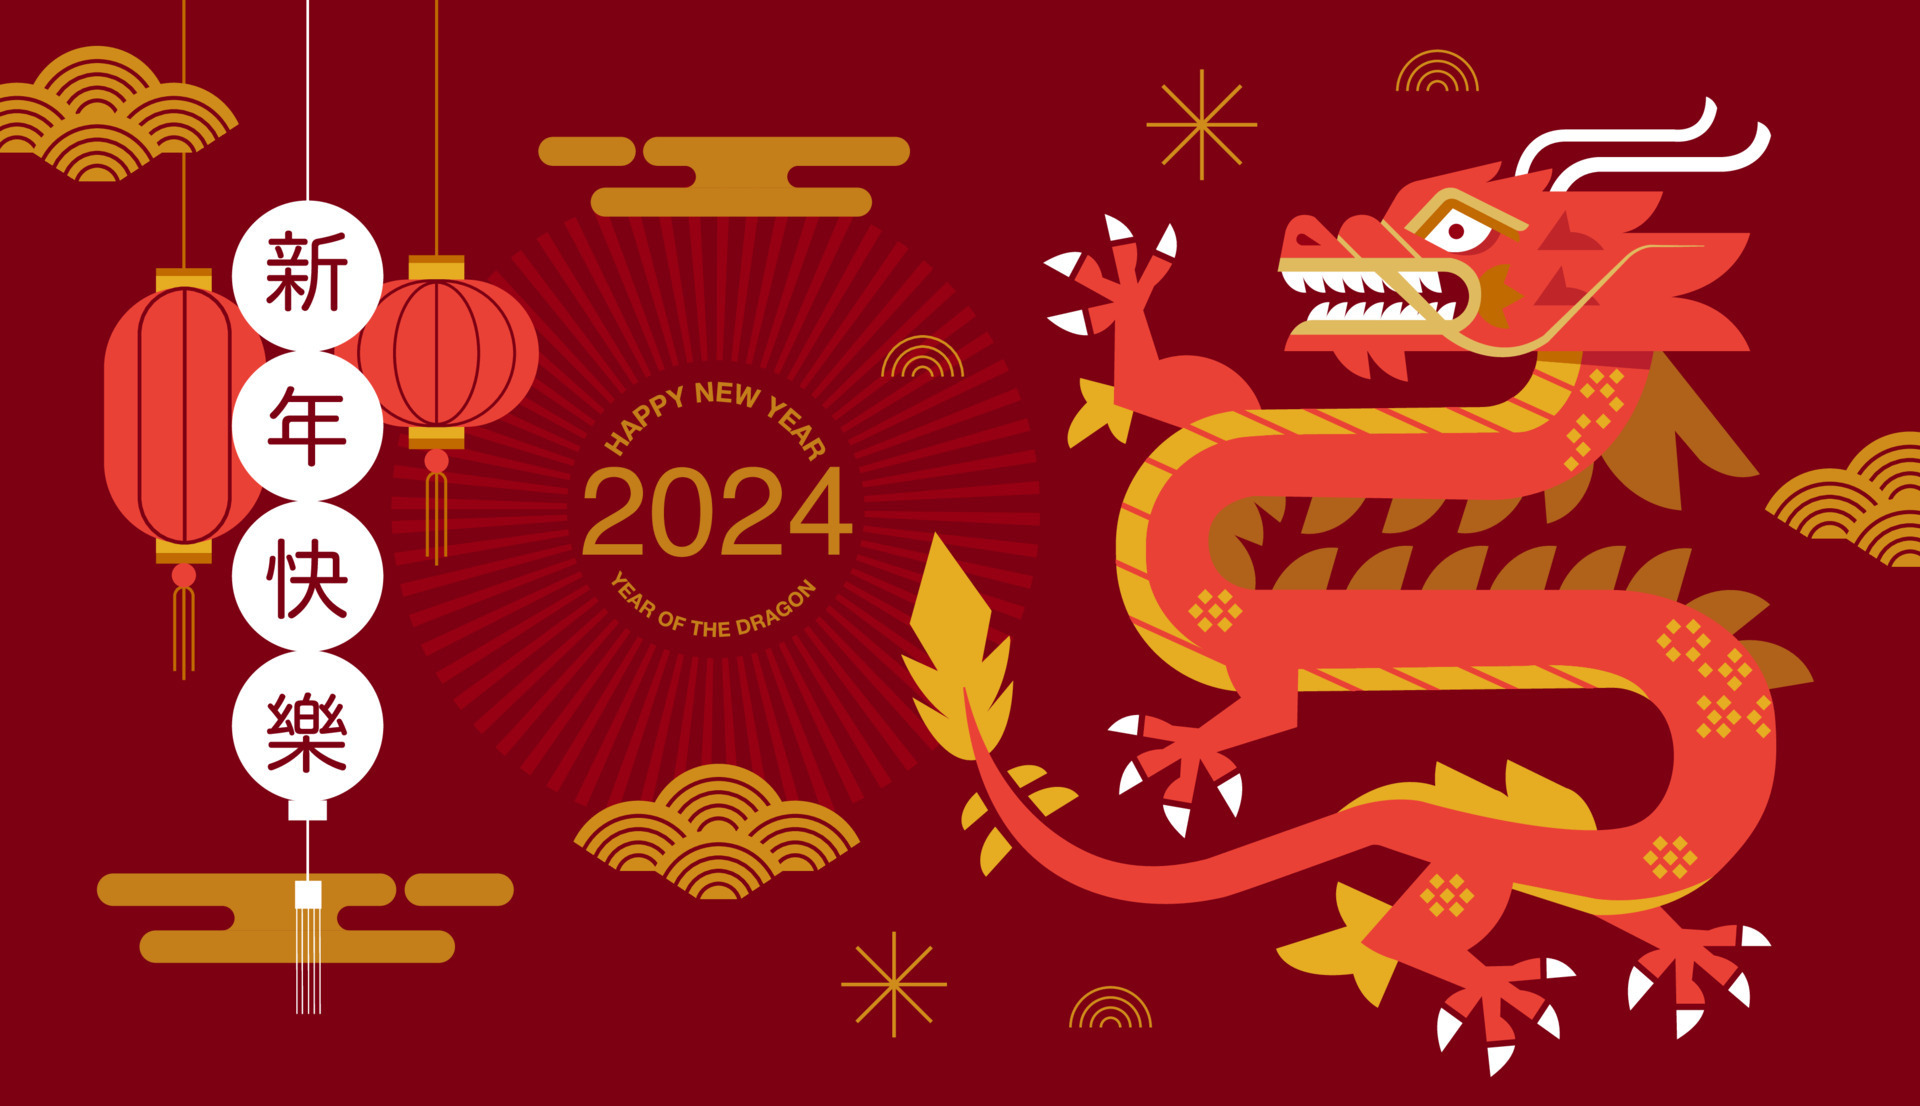 Lunar New Year 2024 Year Of Dragon Image to u